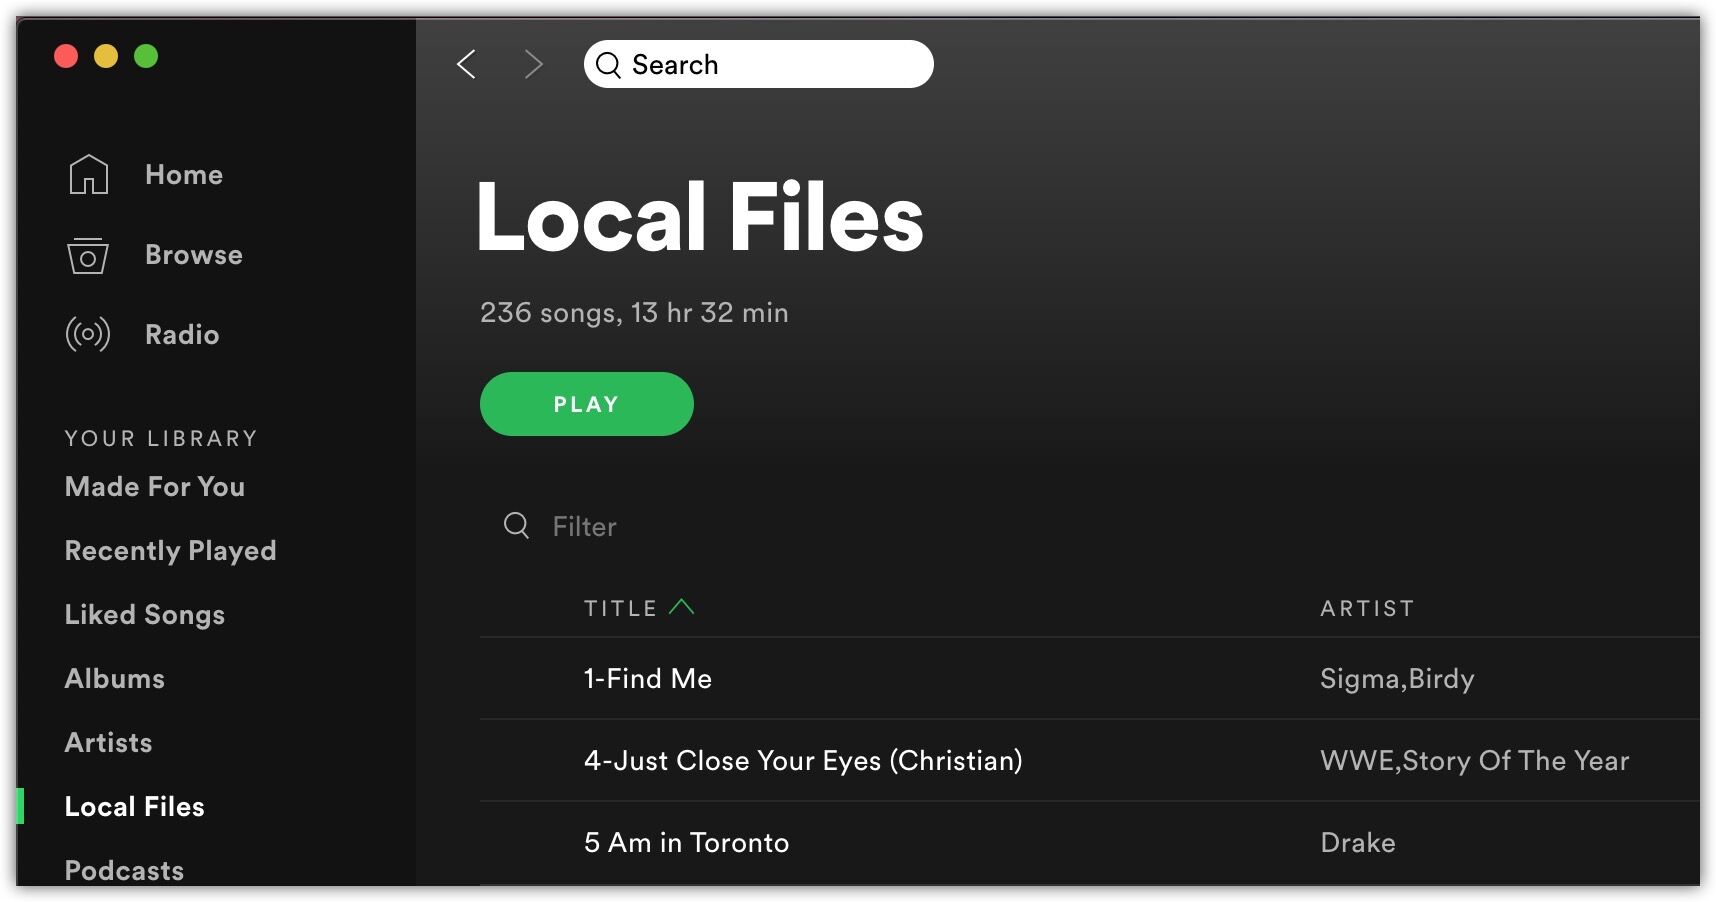 Spotify Local Files